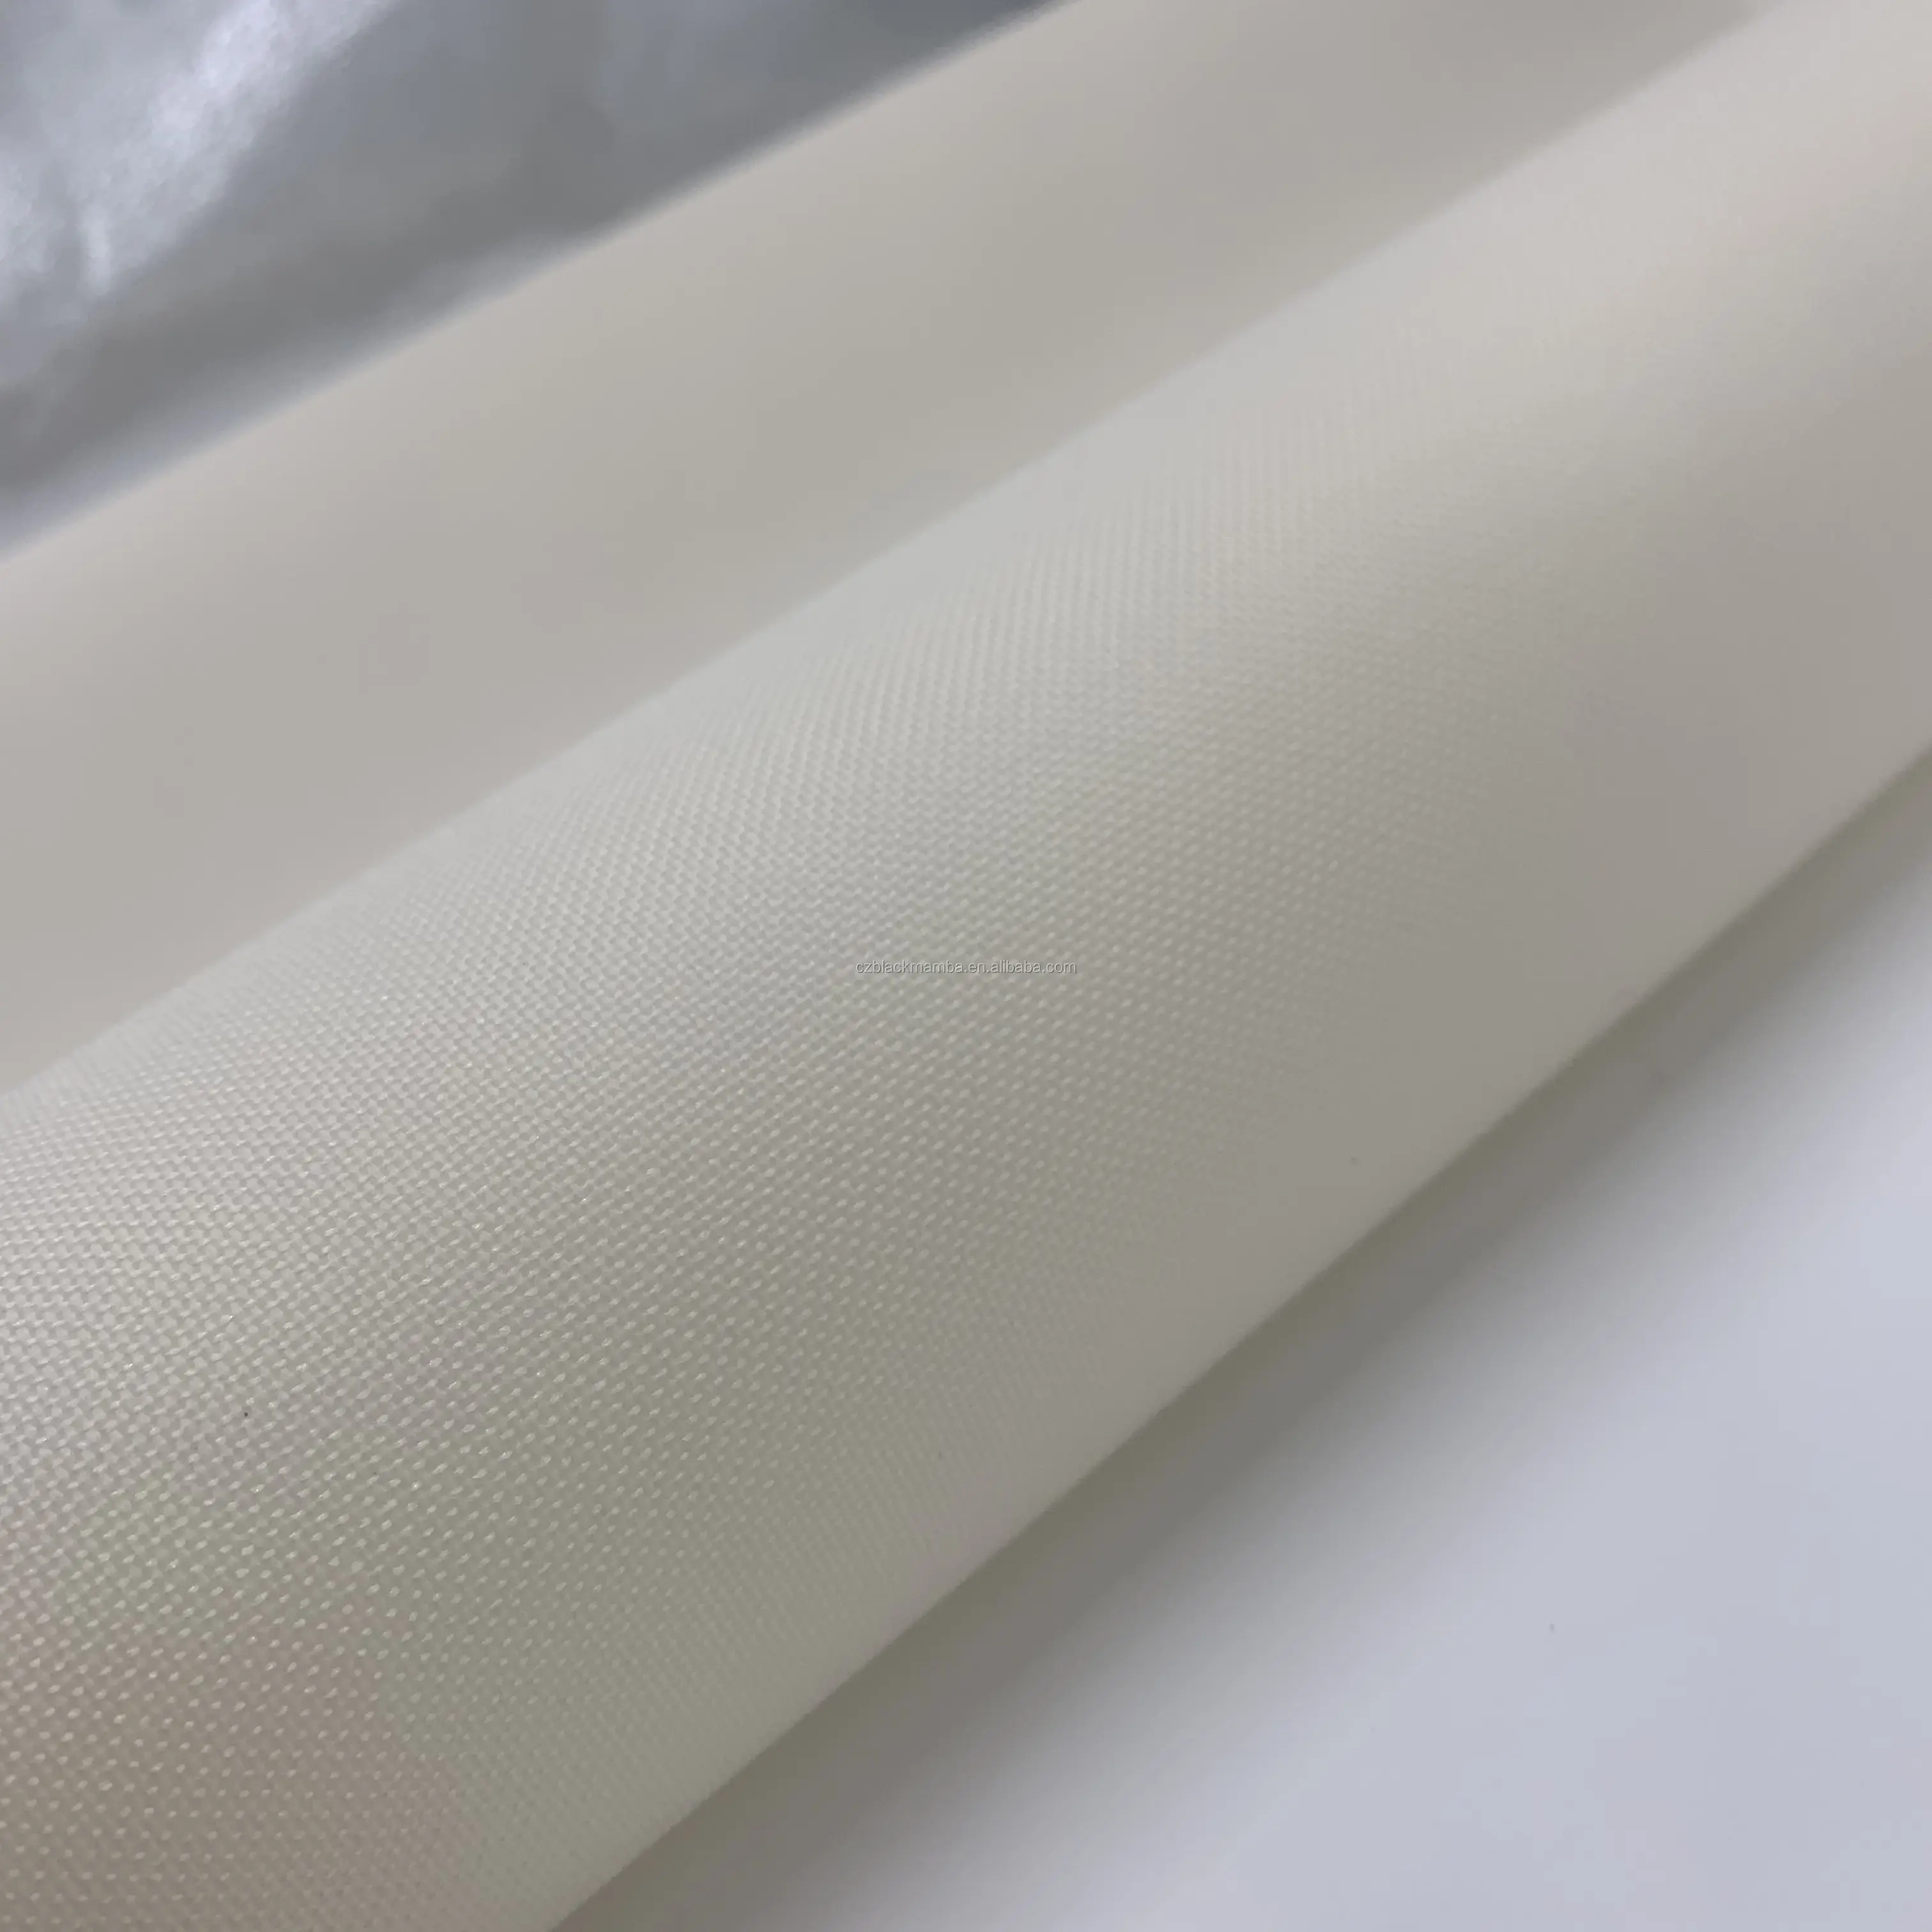 Waterproof PVC Coated 600D d600 Oxford Tent Fabric